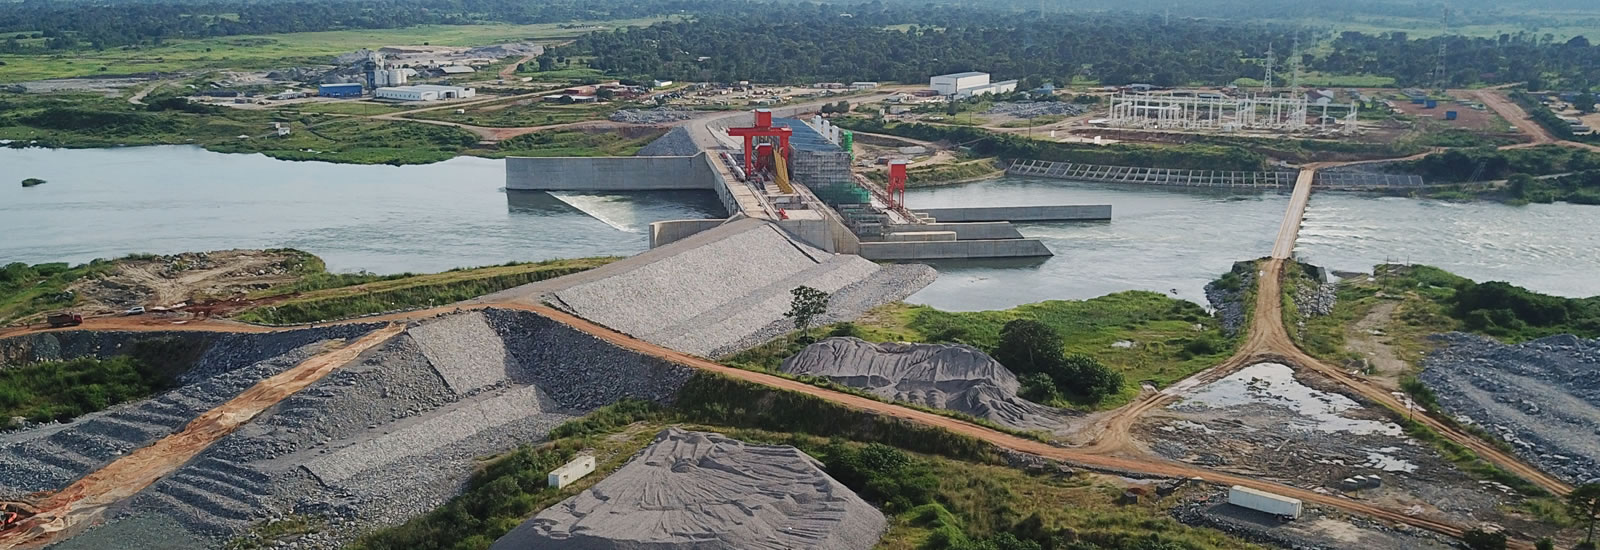 Isimba hydro power dam switched on, as Uganda’s hydro power production ratings improve